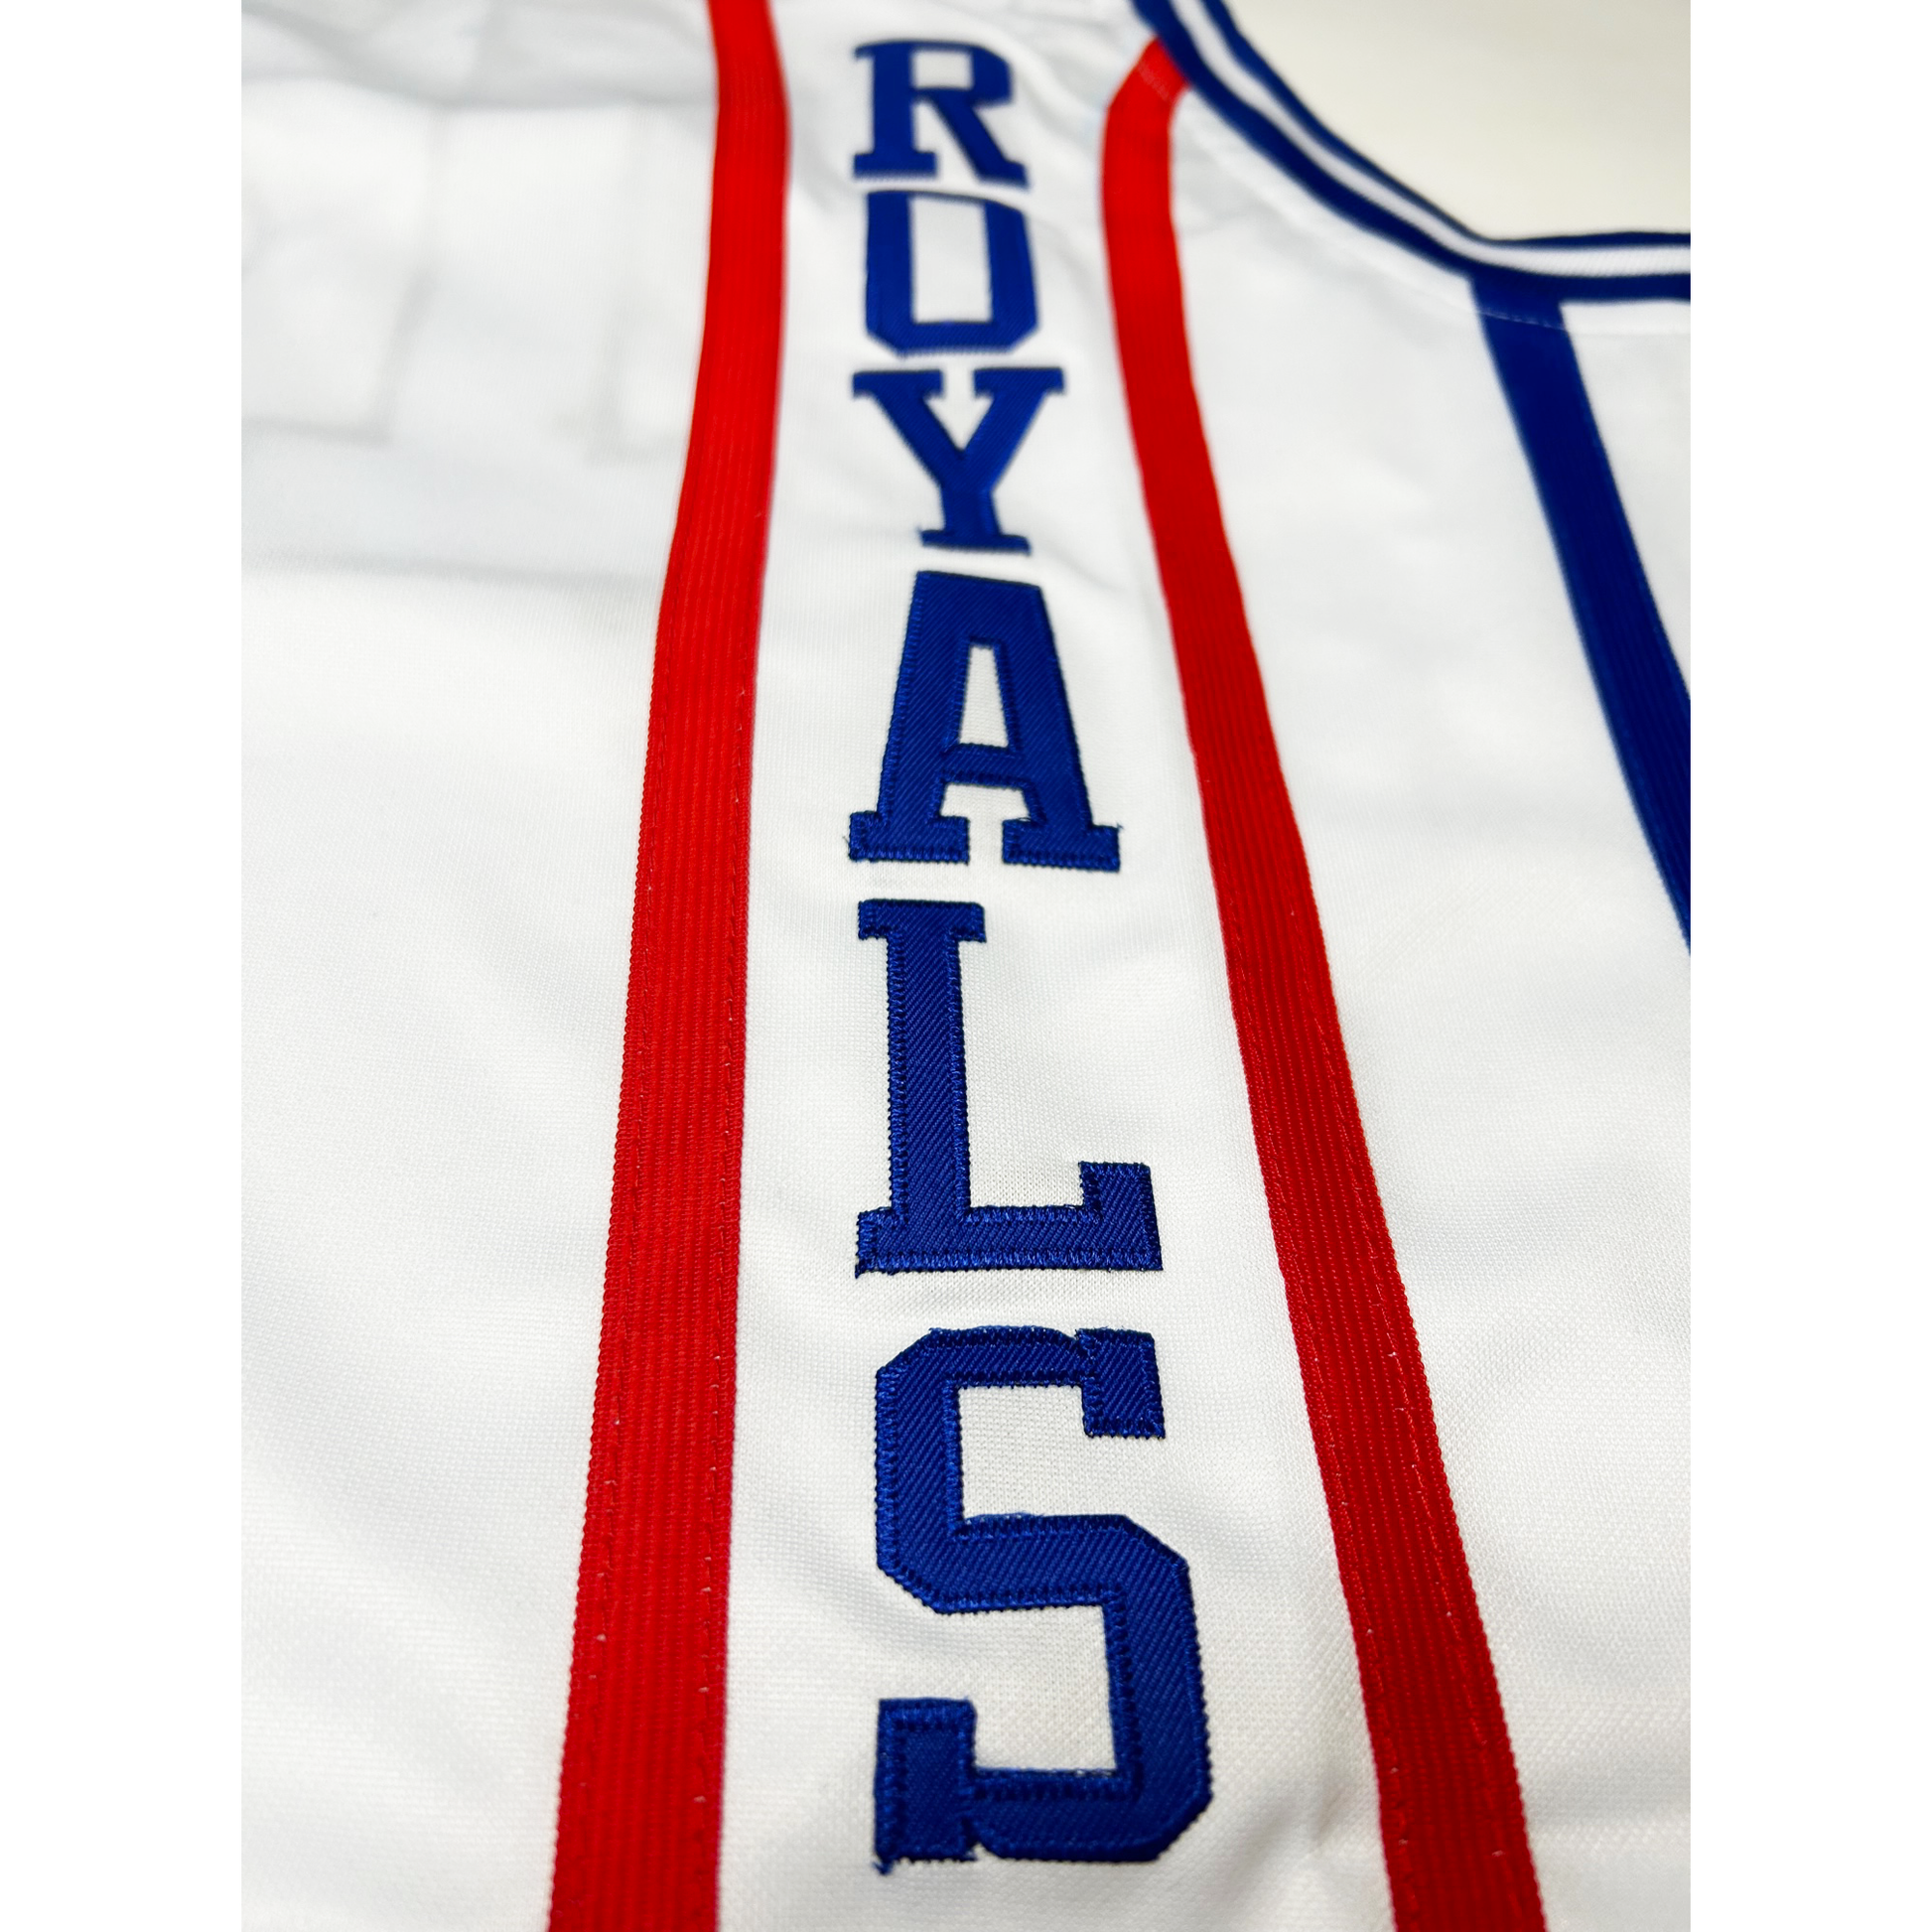 royals all star jersey